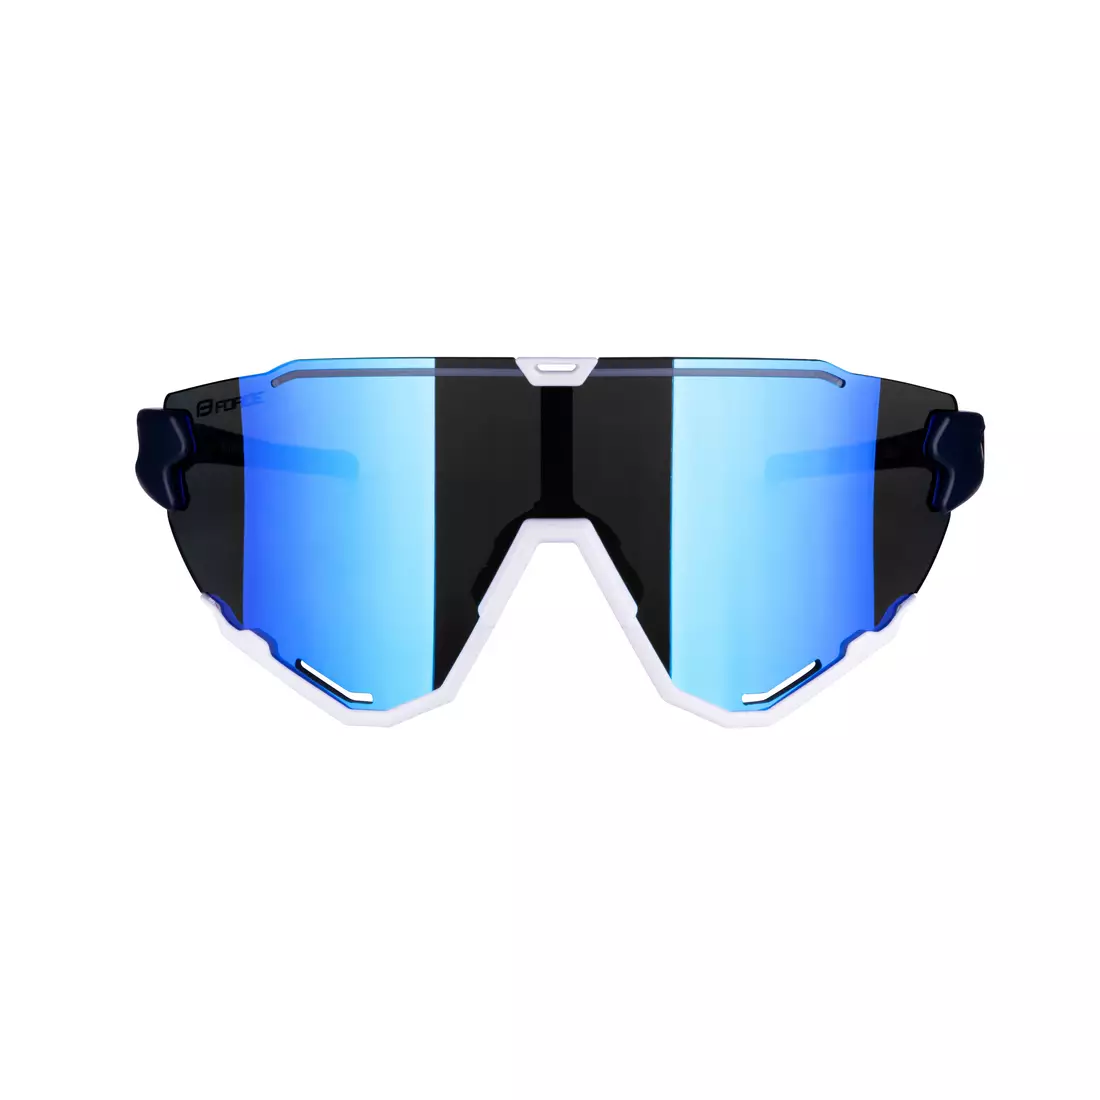 FORCE Fahrrad / Sportbrille CREED blau-fluo, 91184